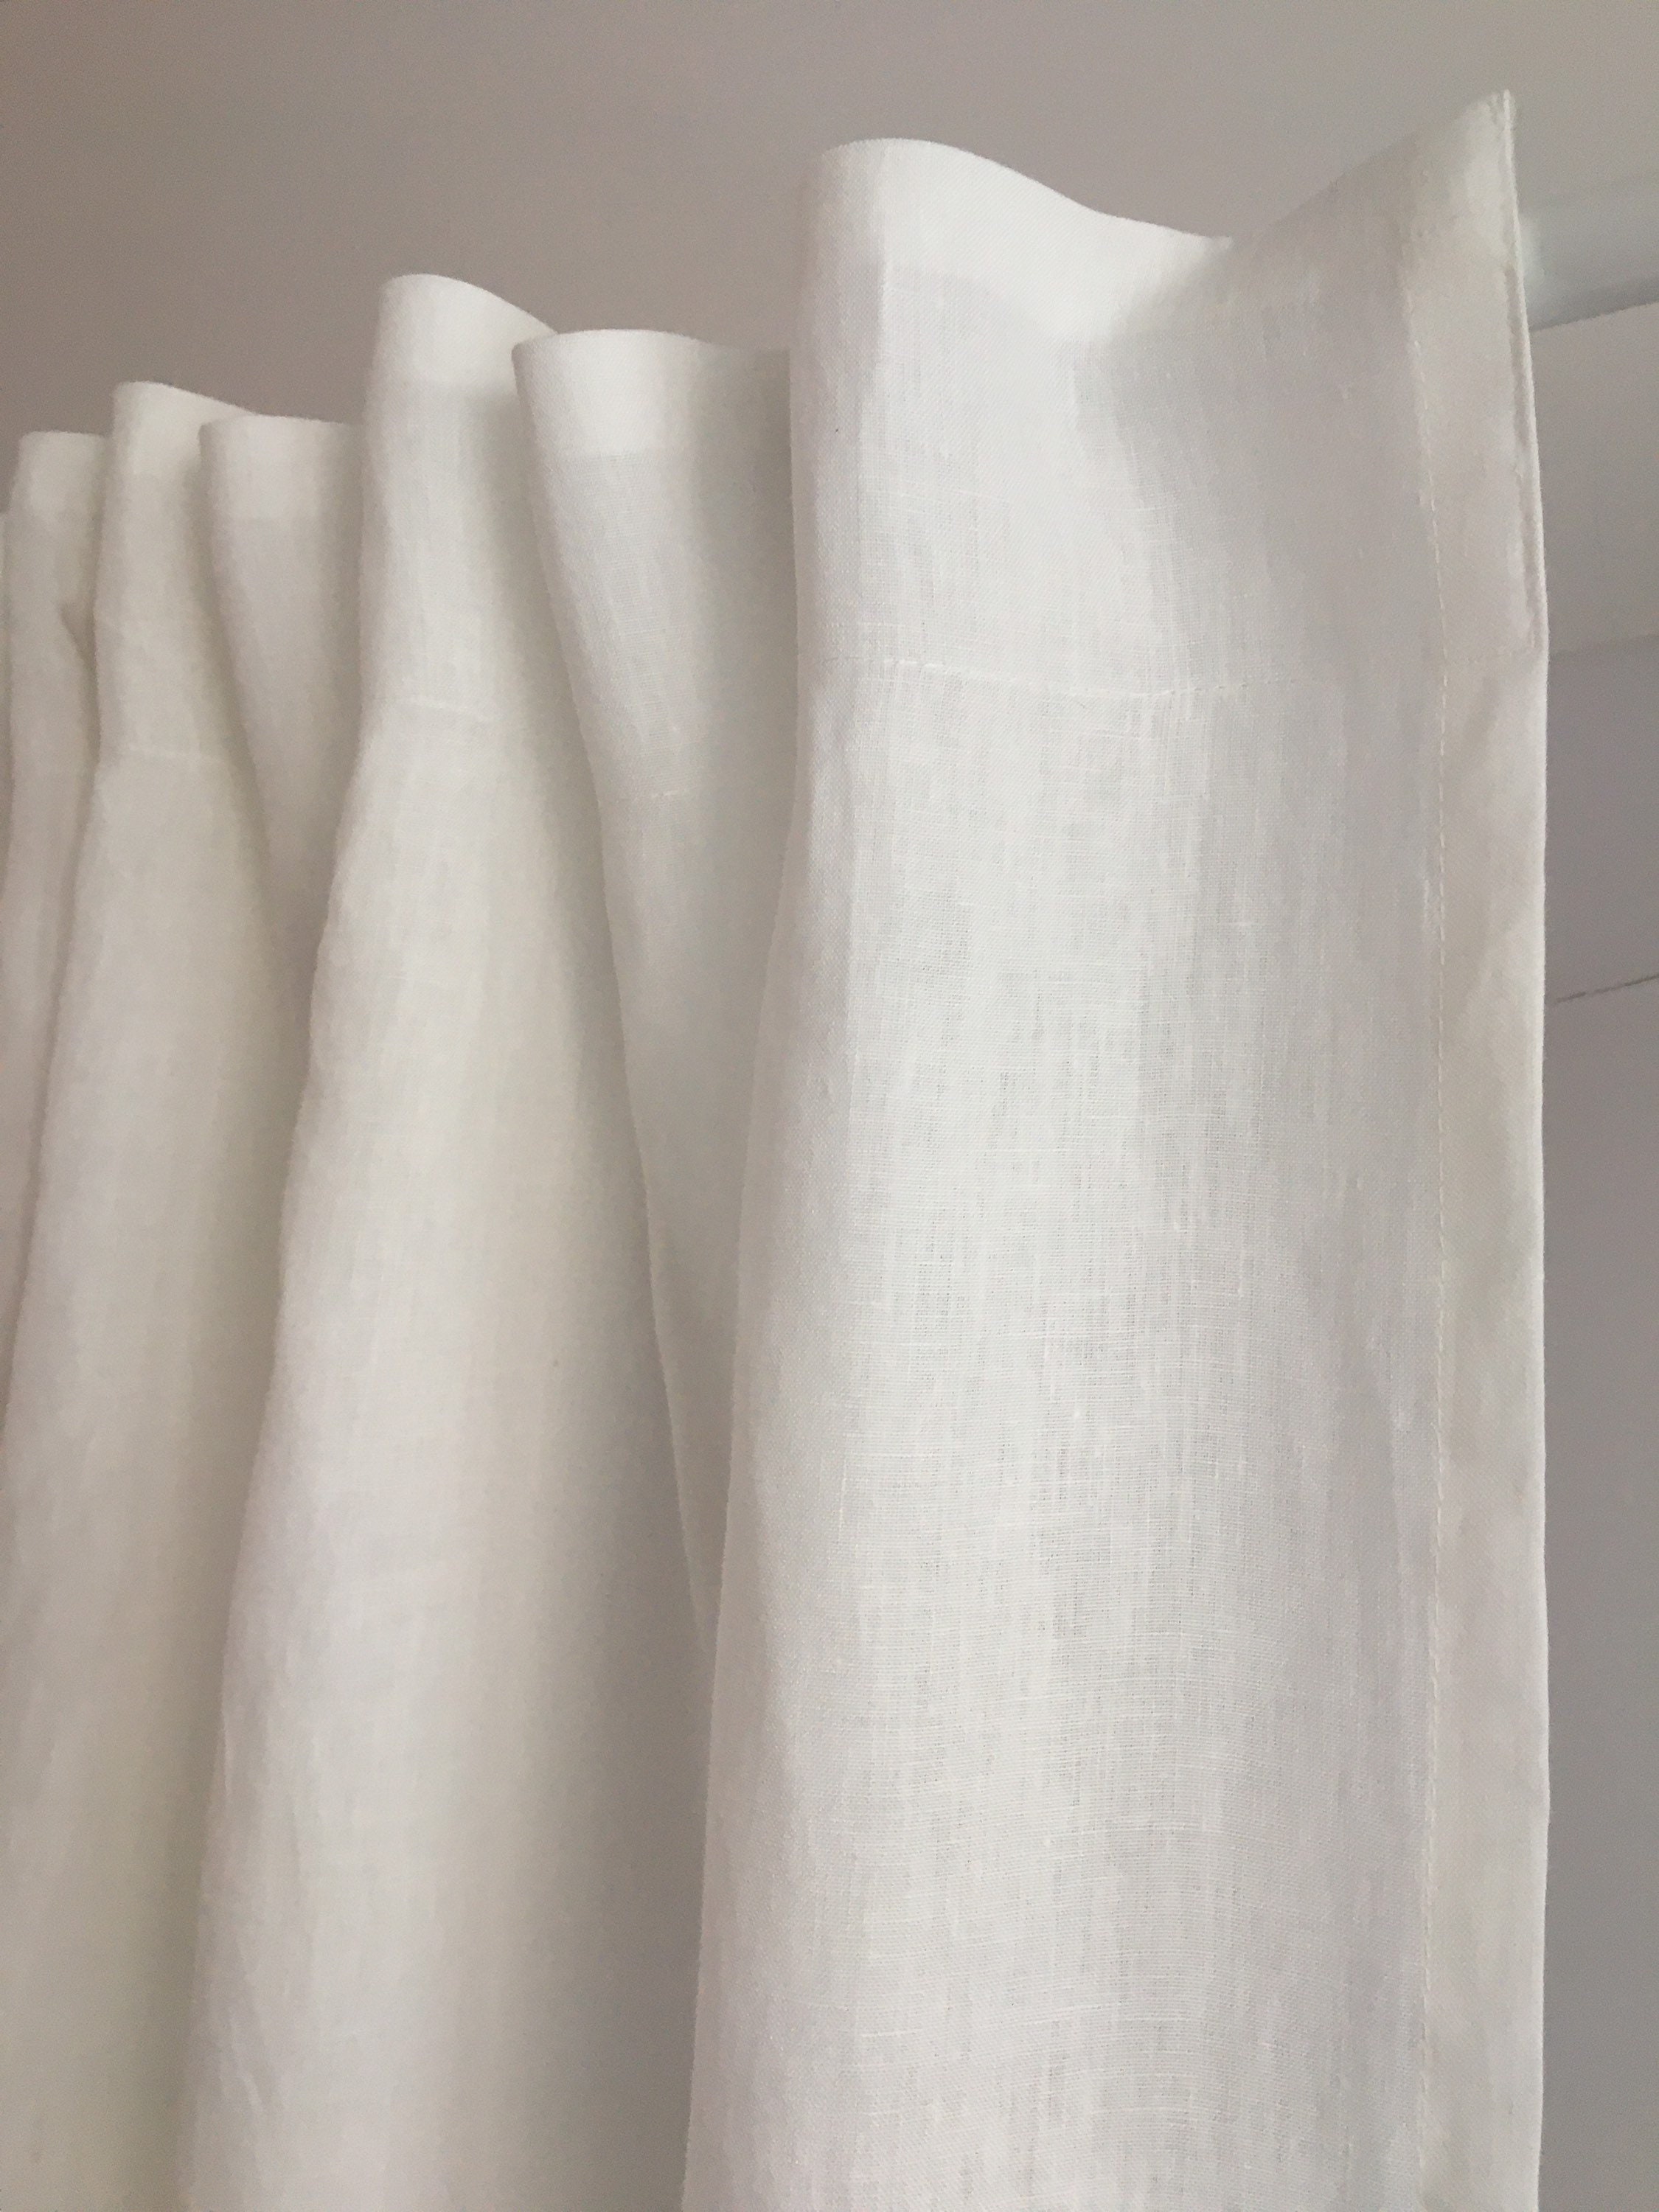 Tan Color Linen Drapes With Trim Tape, Heavy Linen Curtains 